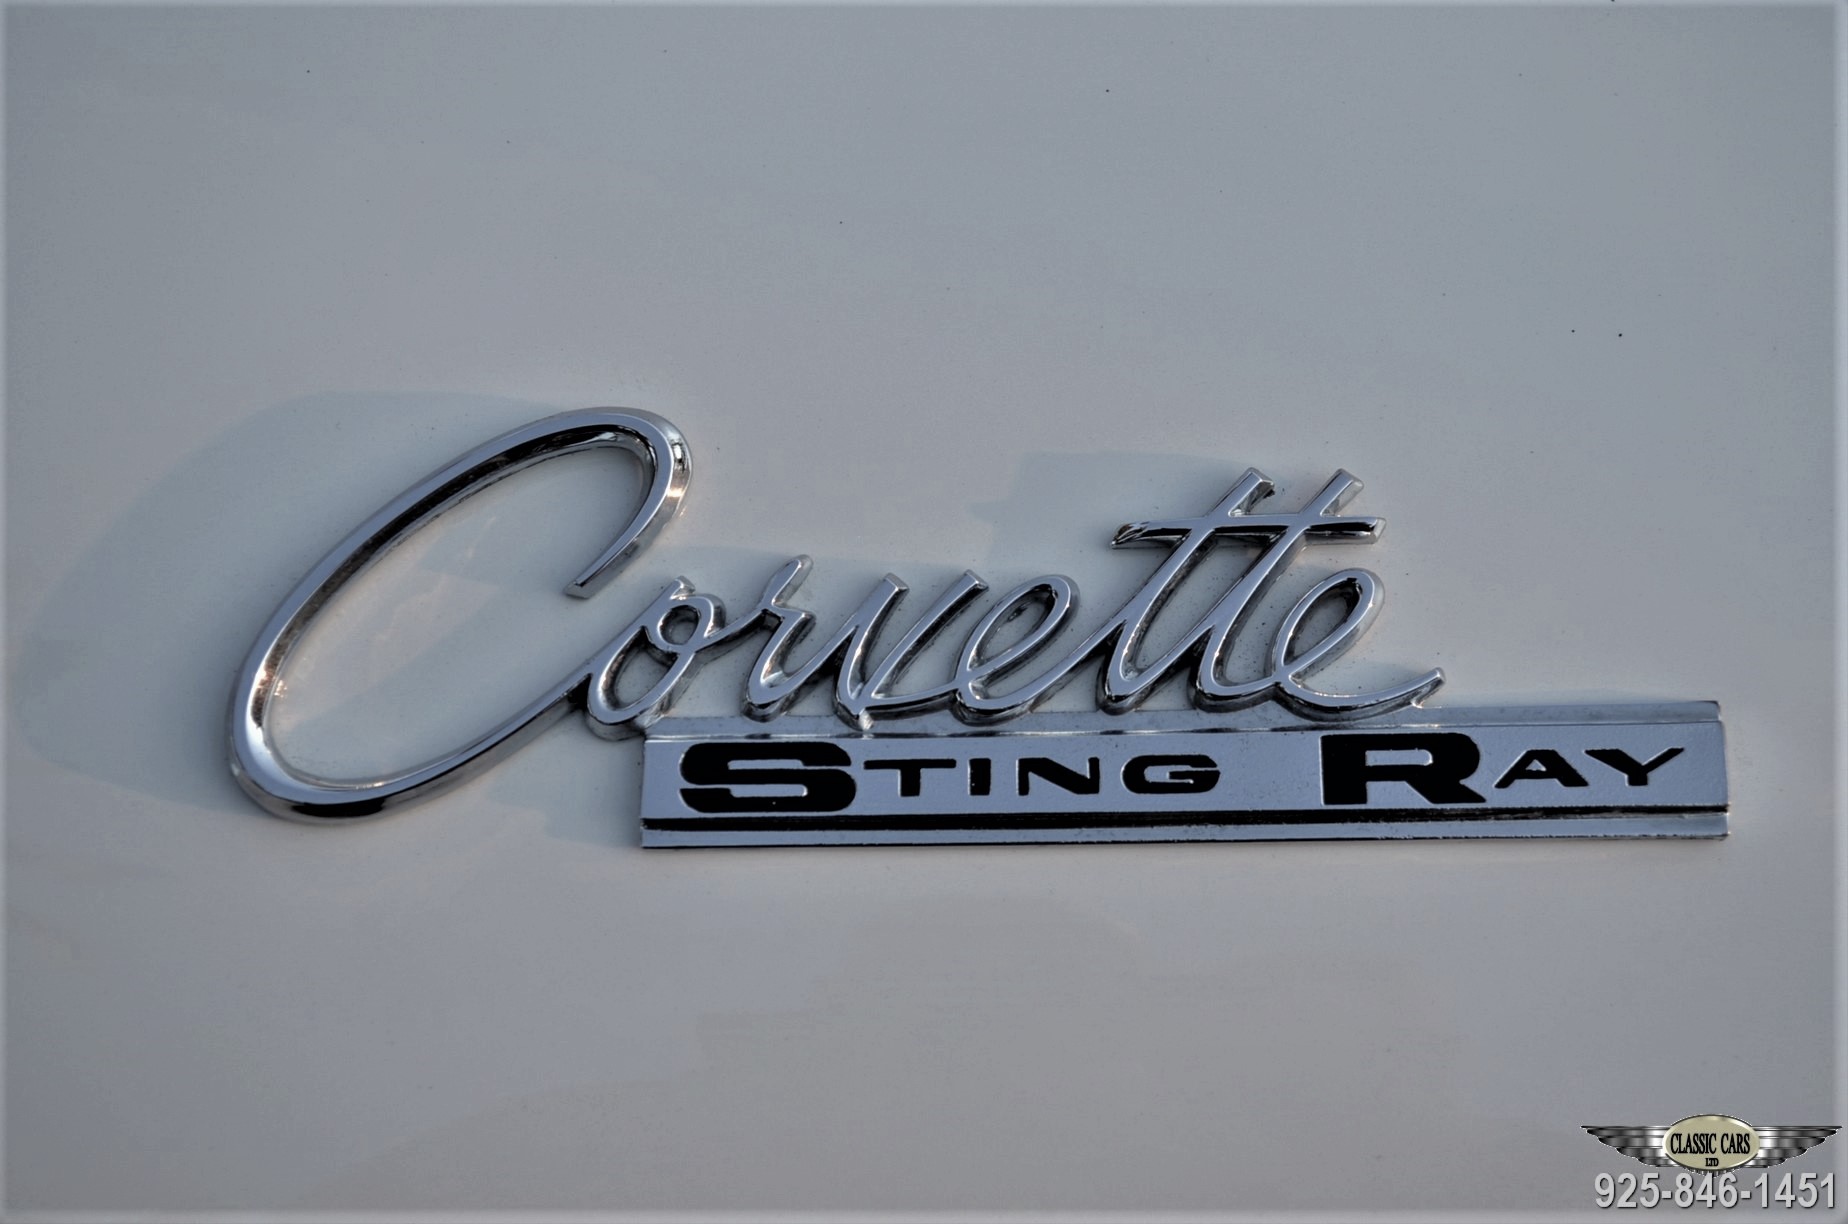 White Corvette Sting Ray classic car